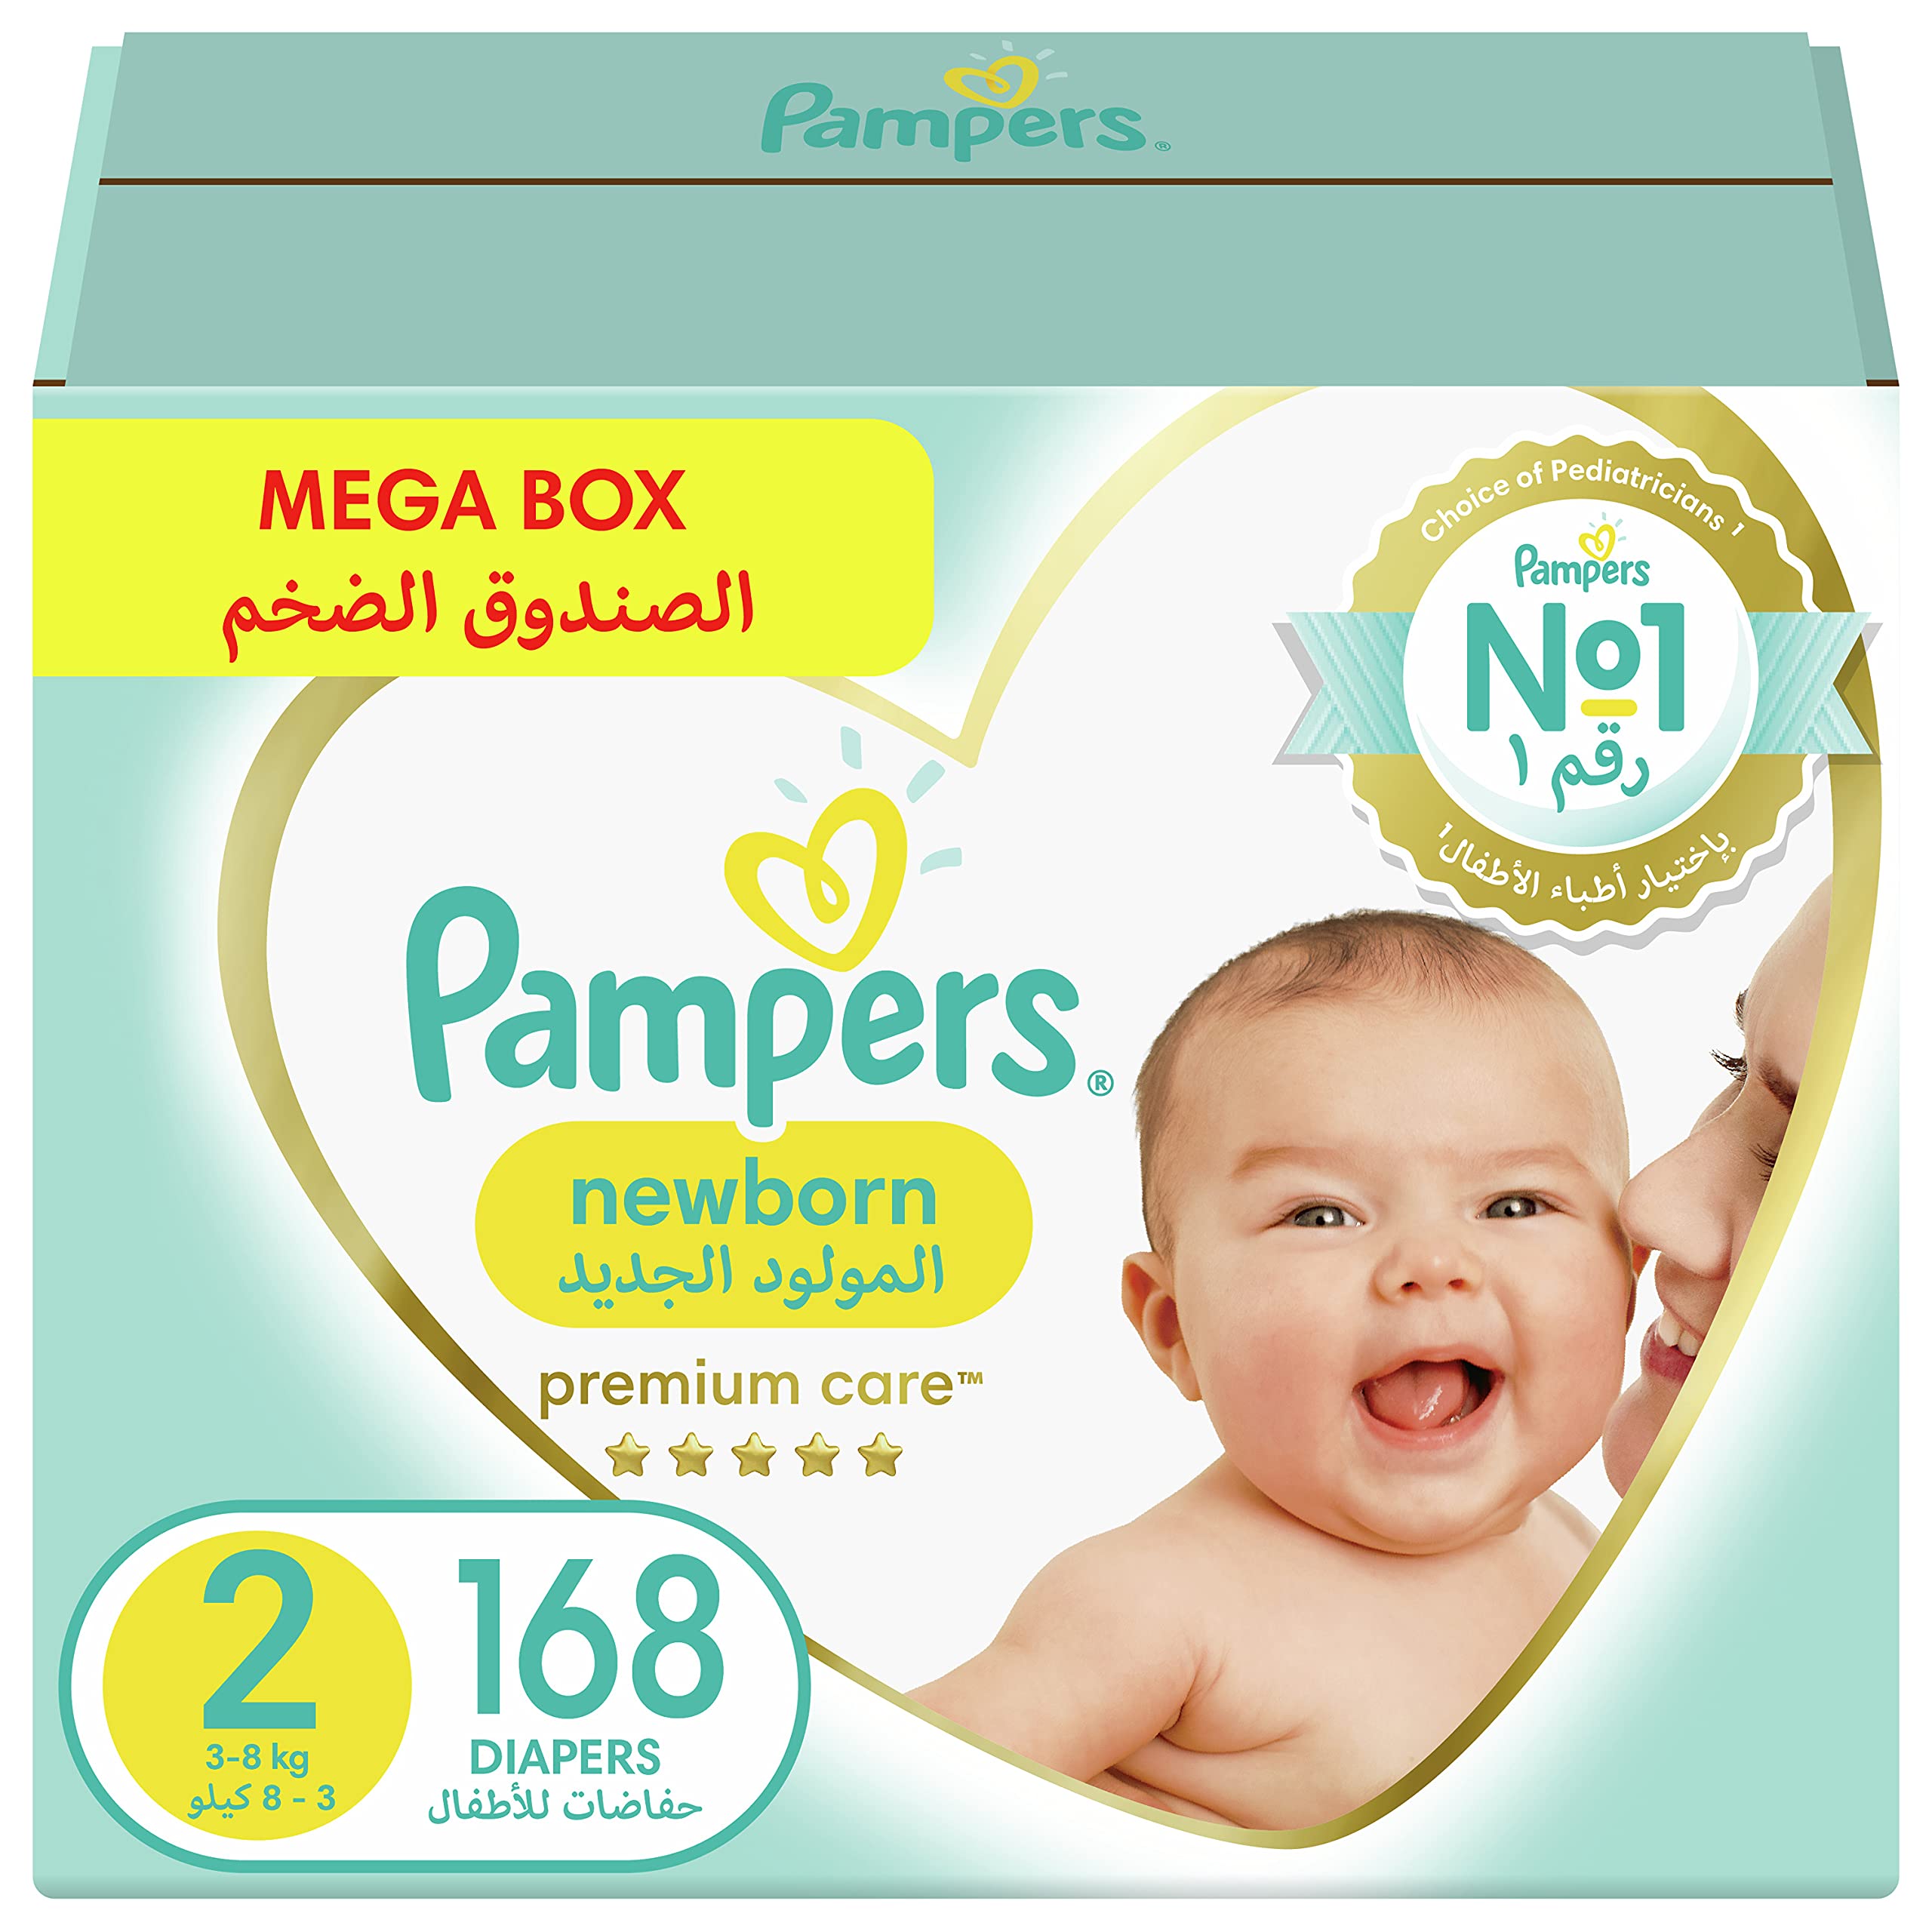 Pampers Premium Care Diapers, Size 2, Mini, 3-8 Kg Softest Diaper Best Skin Protection, 168 Baby Diapers حفاضات بريميوم كير ناعمة لعناية اضافية ولحماية البشرة  بامبرز، مقاس 2 صغير، 3-8 كجم، 168 قطعة